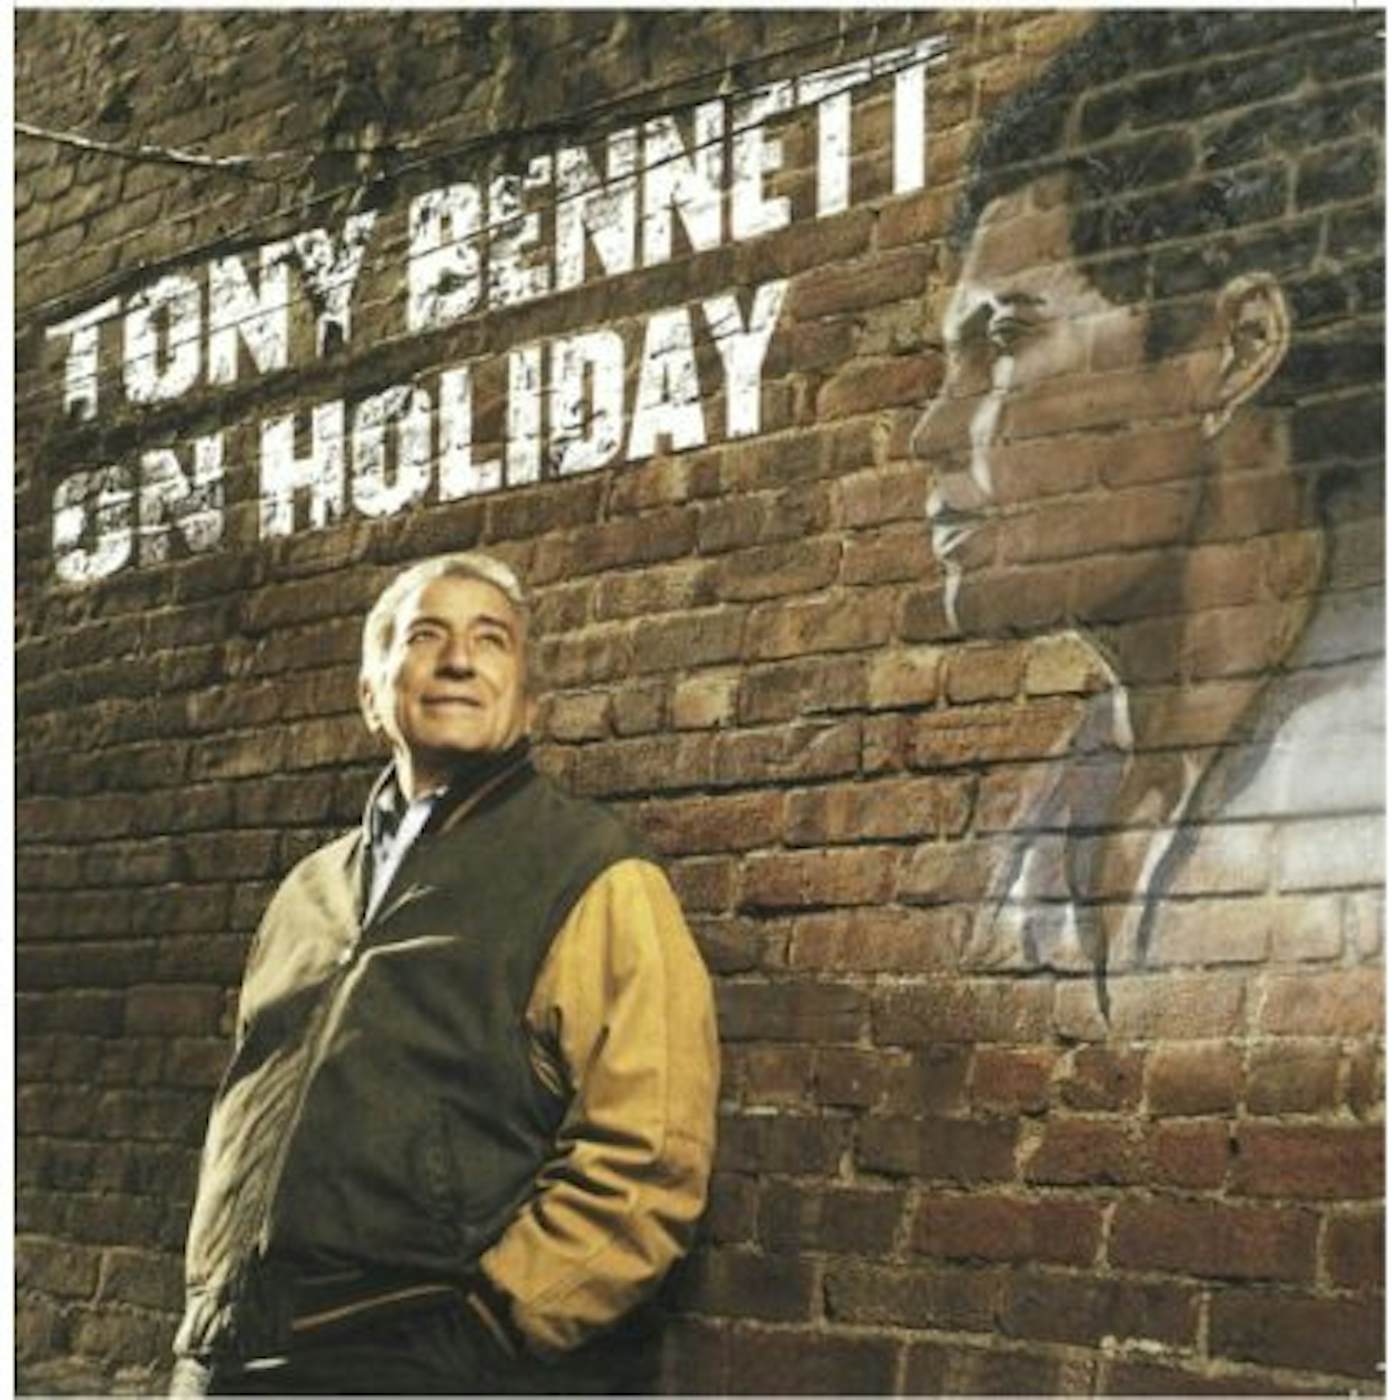 TONY BENNETT ON HOLIDAY CD